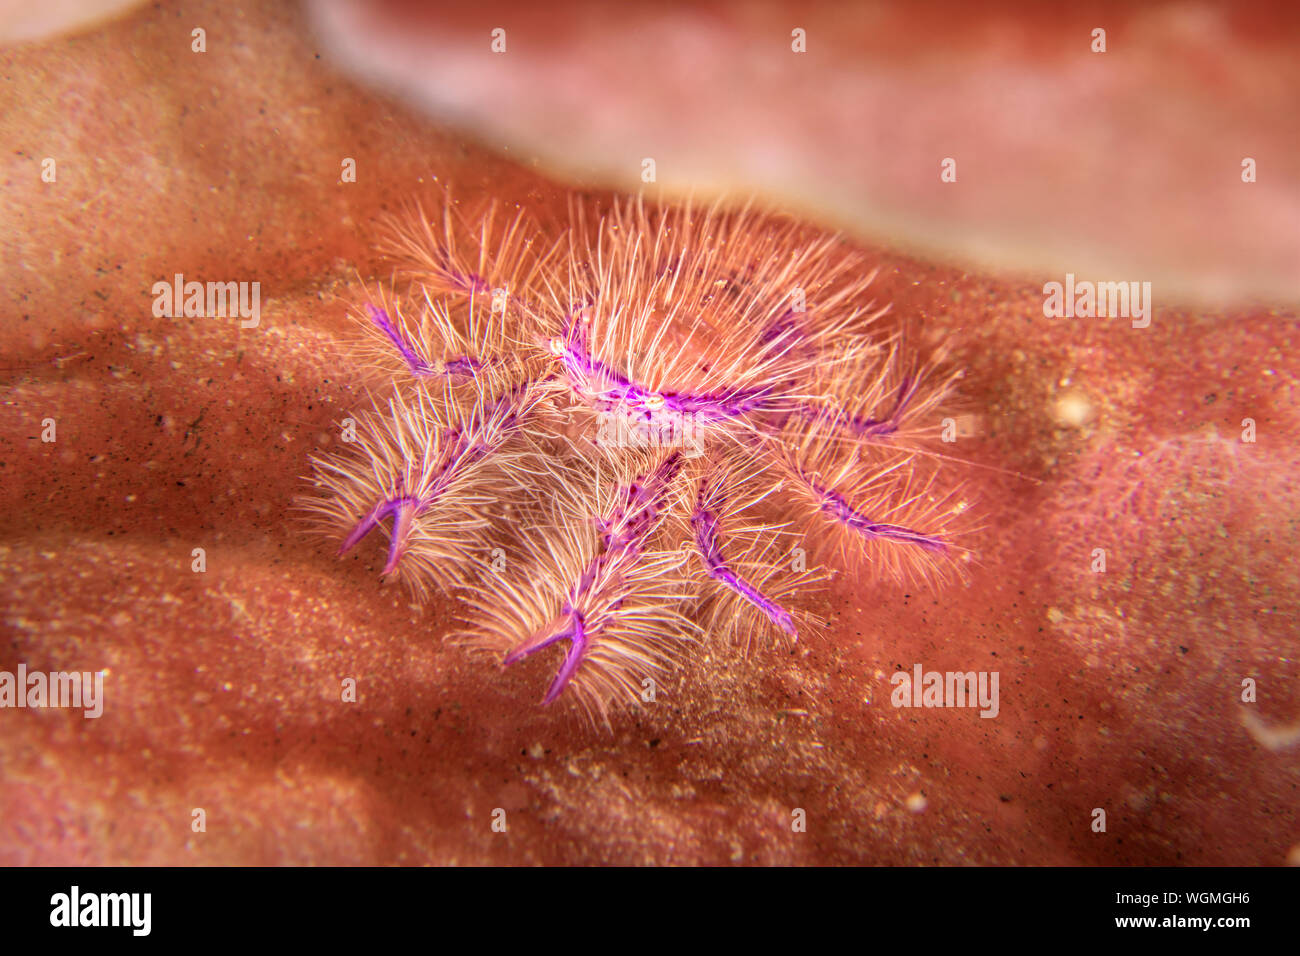 Una bella viola e rosa hairy squat lobster nasconde in una fenditura su una spugna. Foto Stock